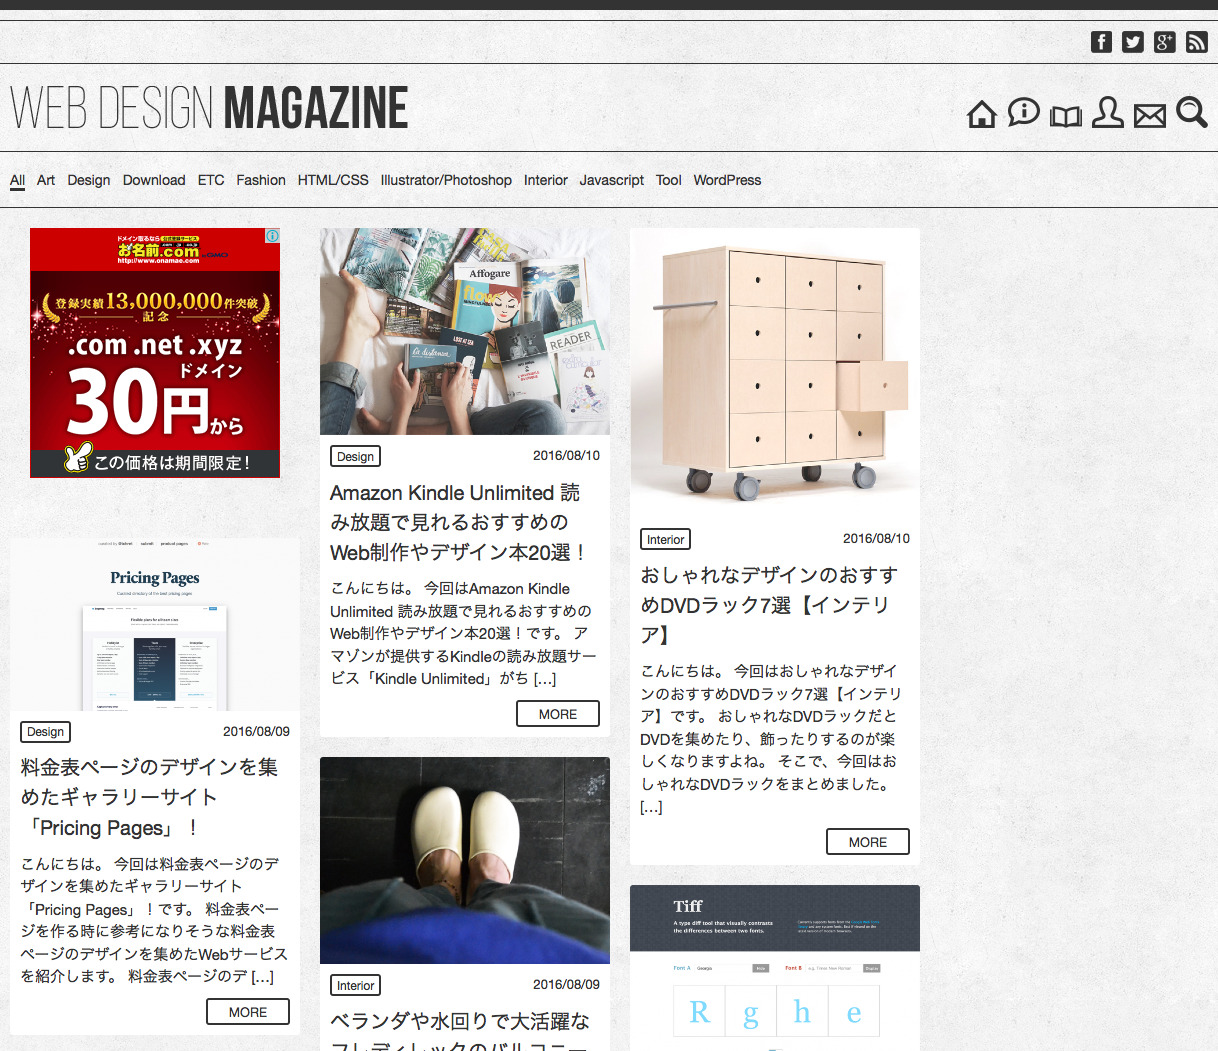 Web Design Magazine